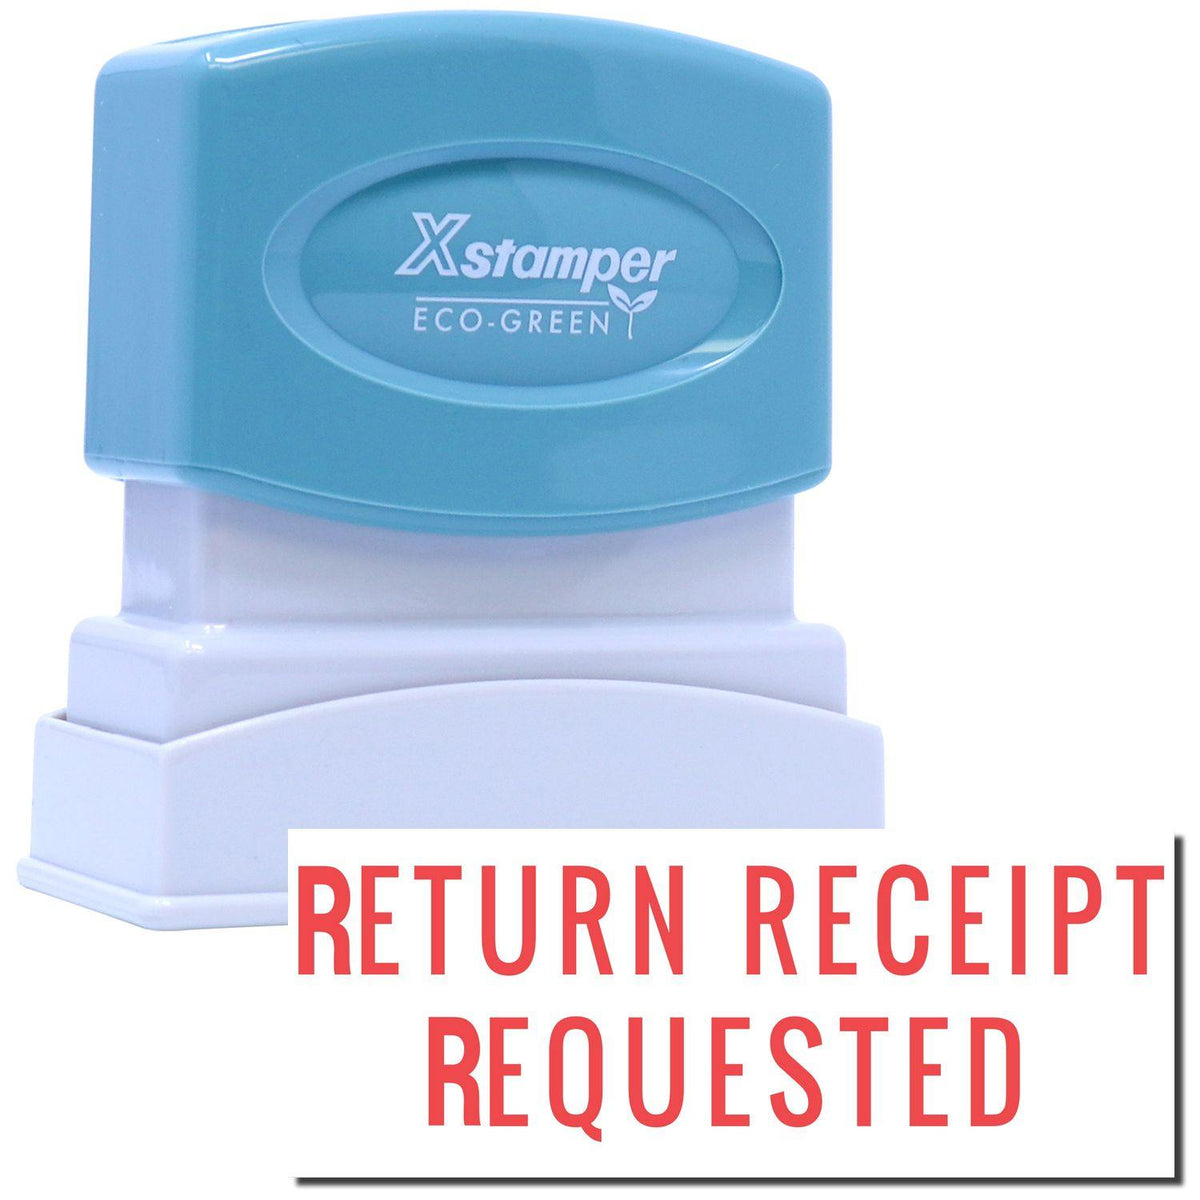 Return Receipt Requested Xstamper Stamp Main Image